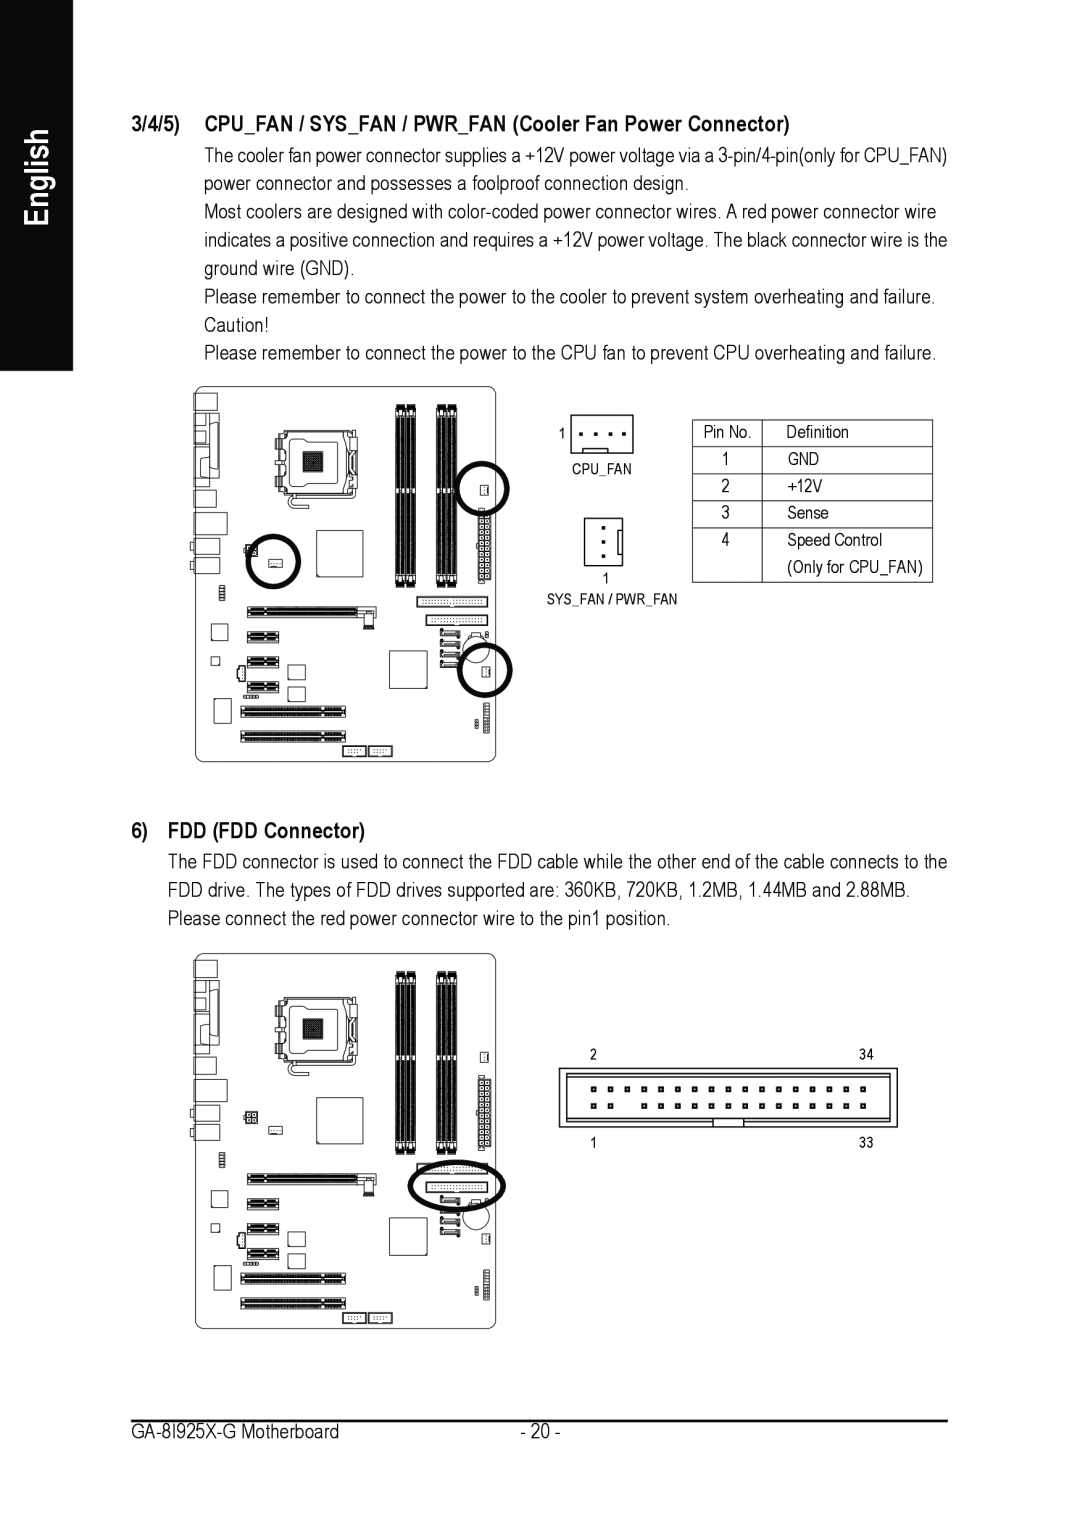 Gigabyte GA-8I925X-G user manual 3/4/5 CPUFAN / SYSFAN / PWRFAN Cooler Fan Power Connector, FDD FDD Connector, English 